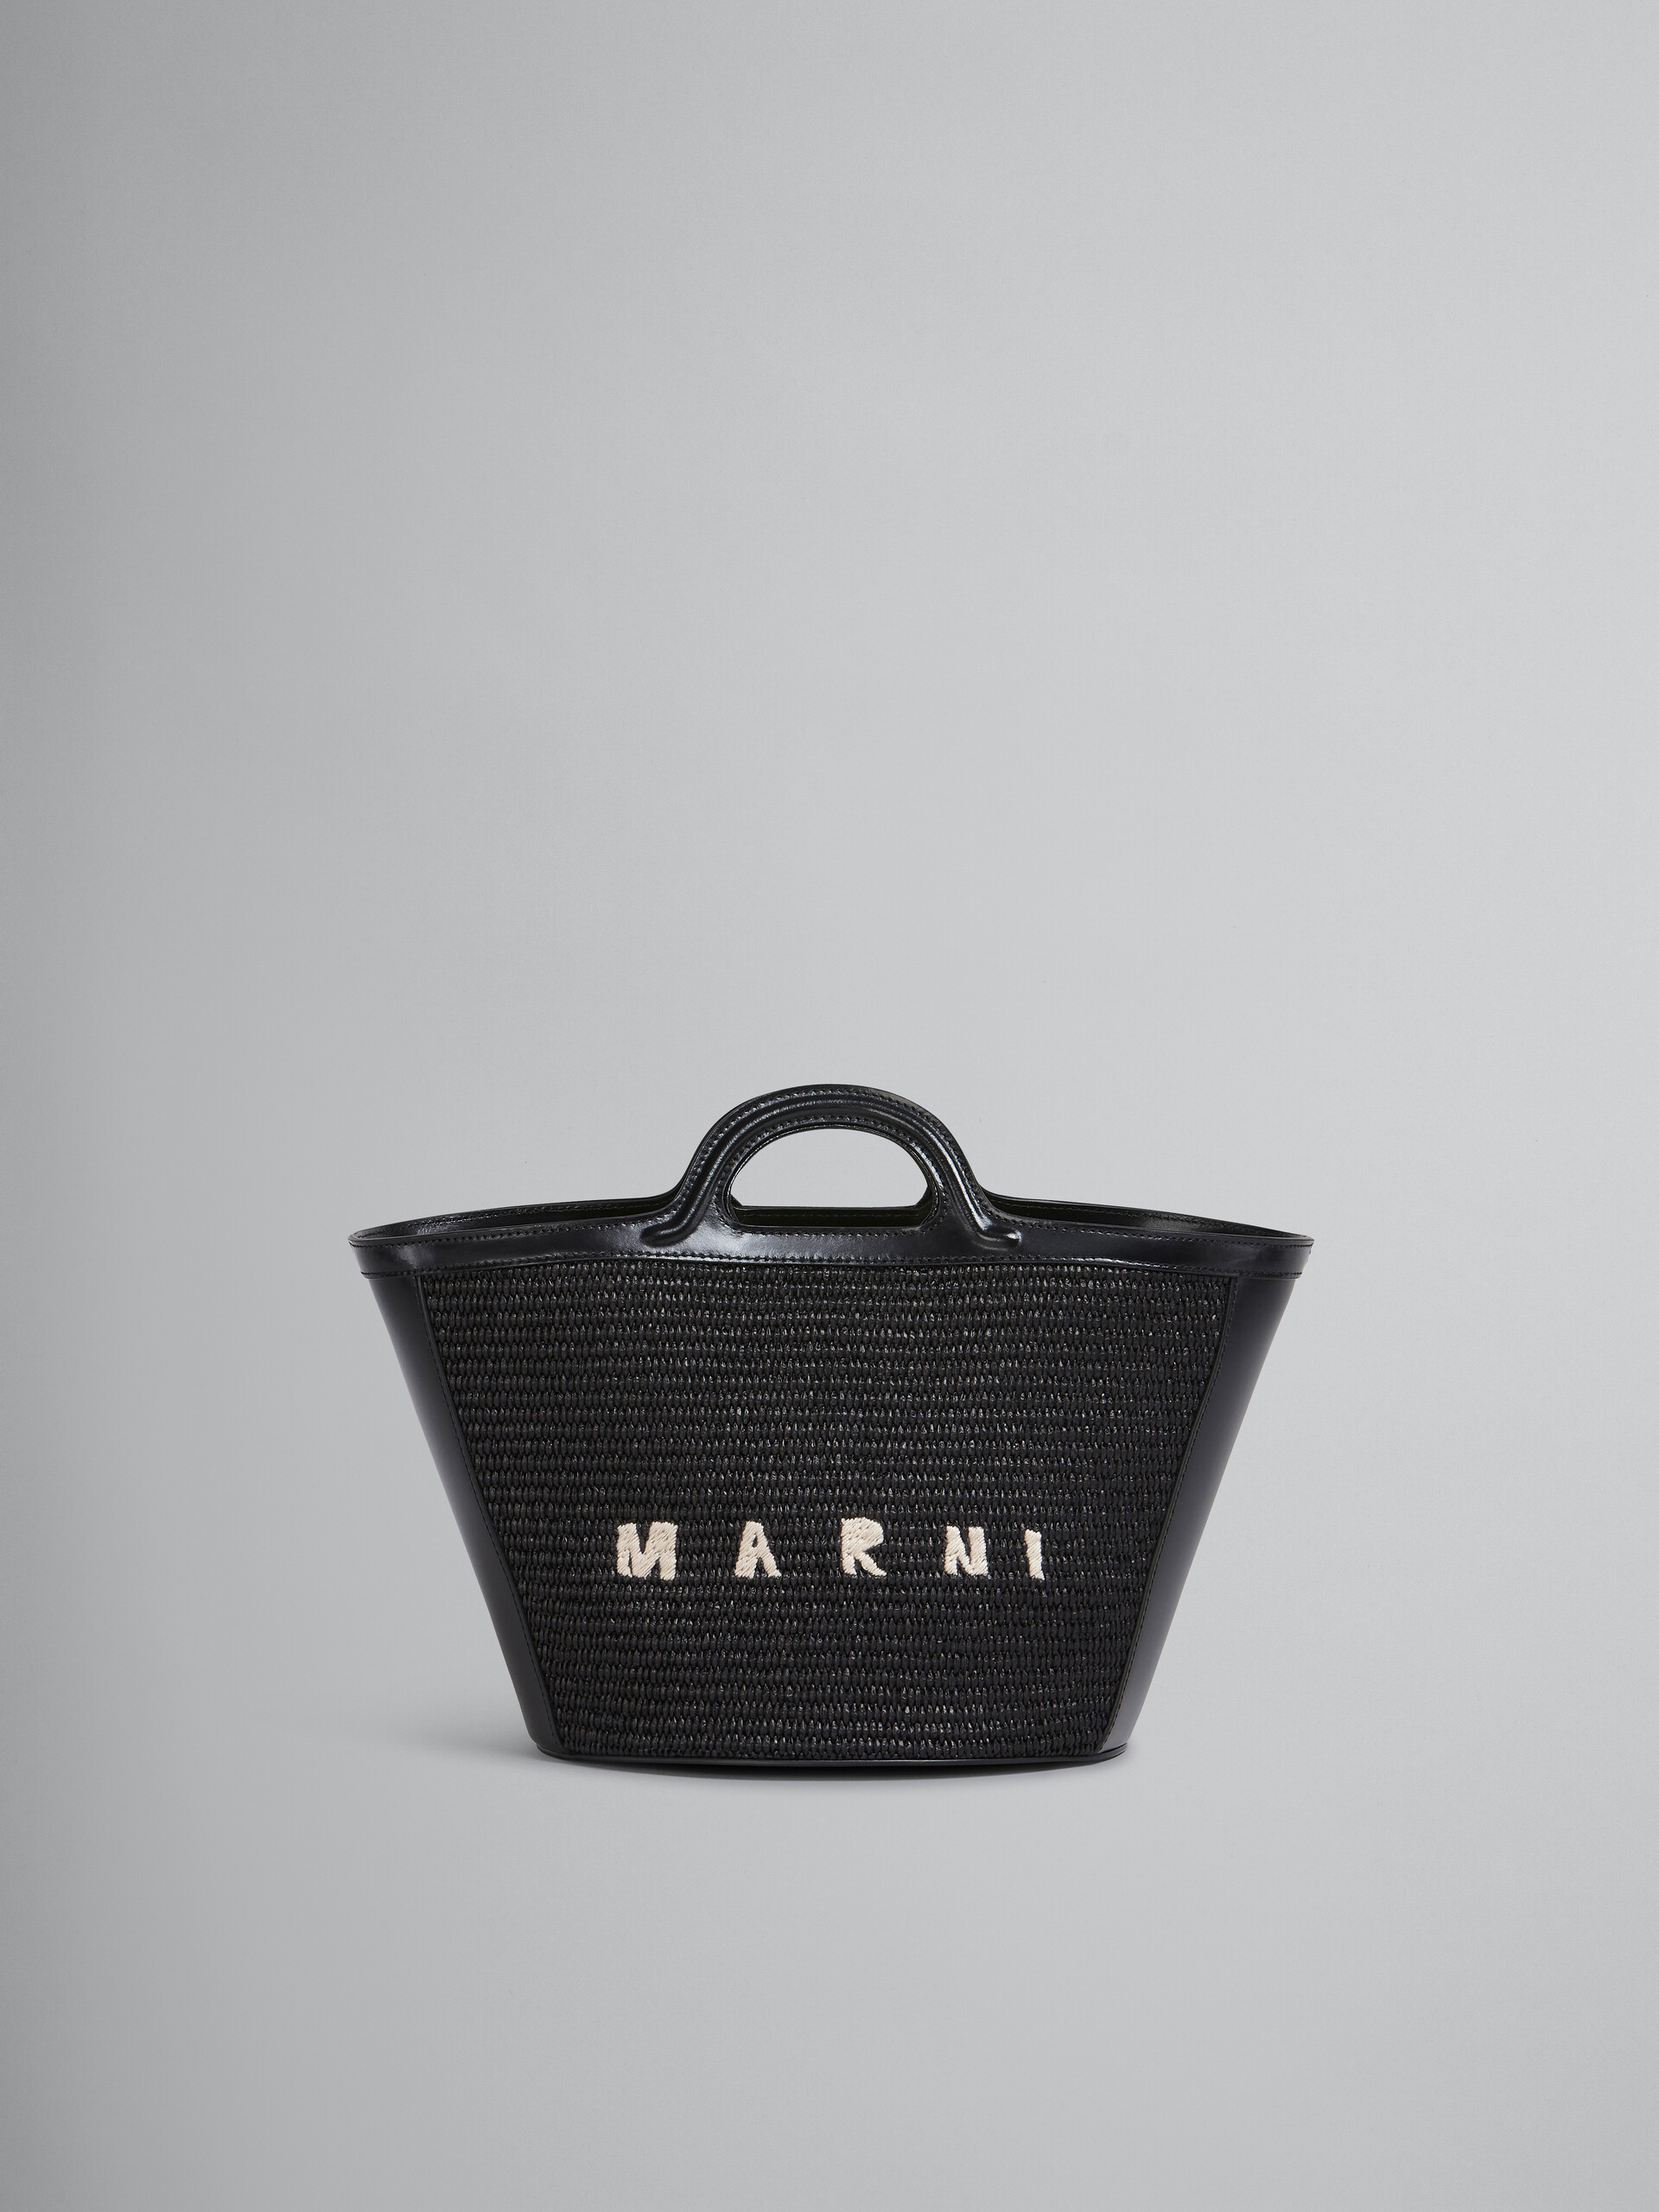 Tropicalia Small Bag in black leather and raffia - Handbags - Image 1